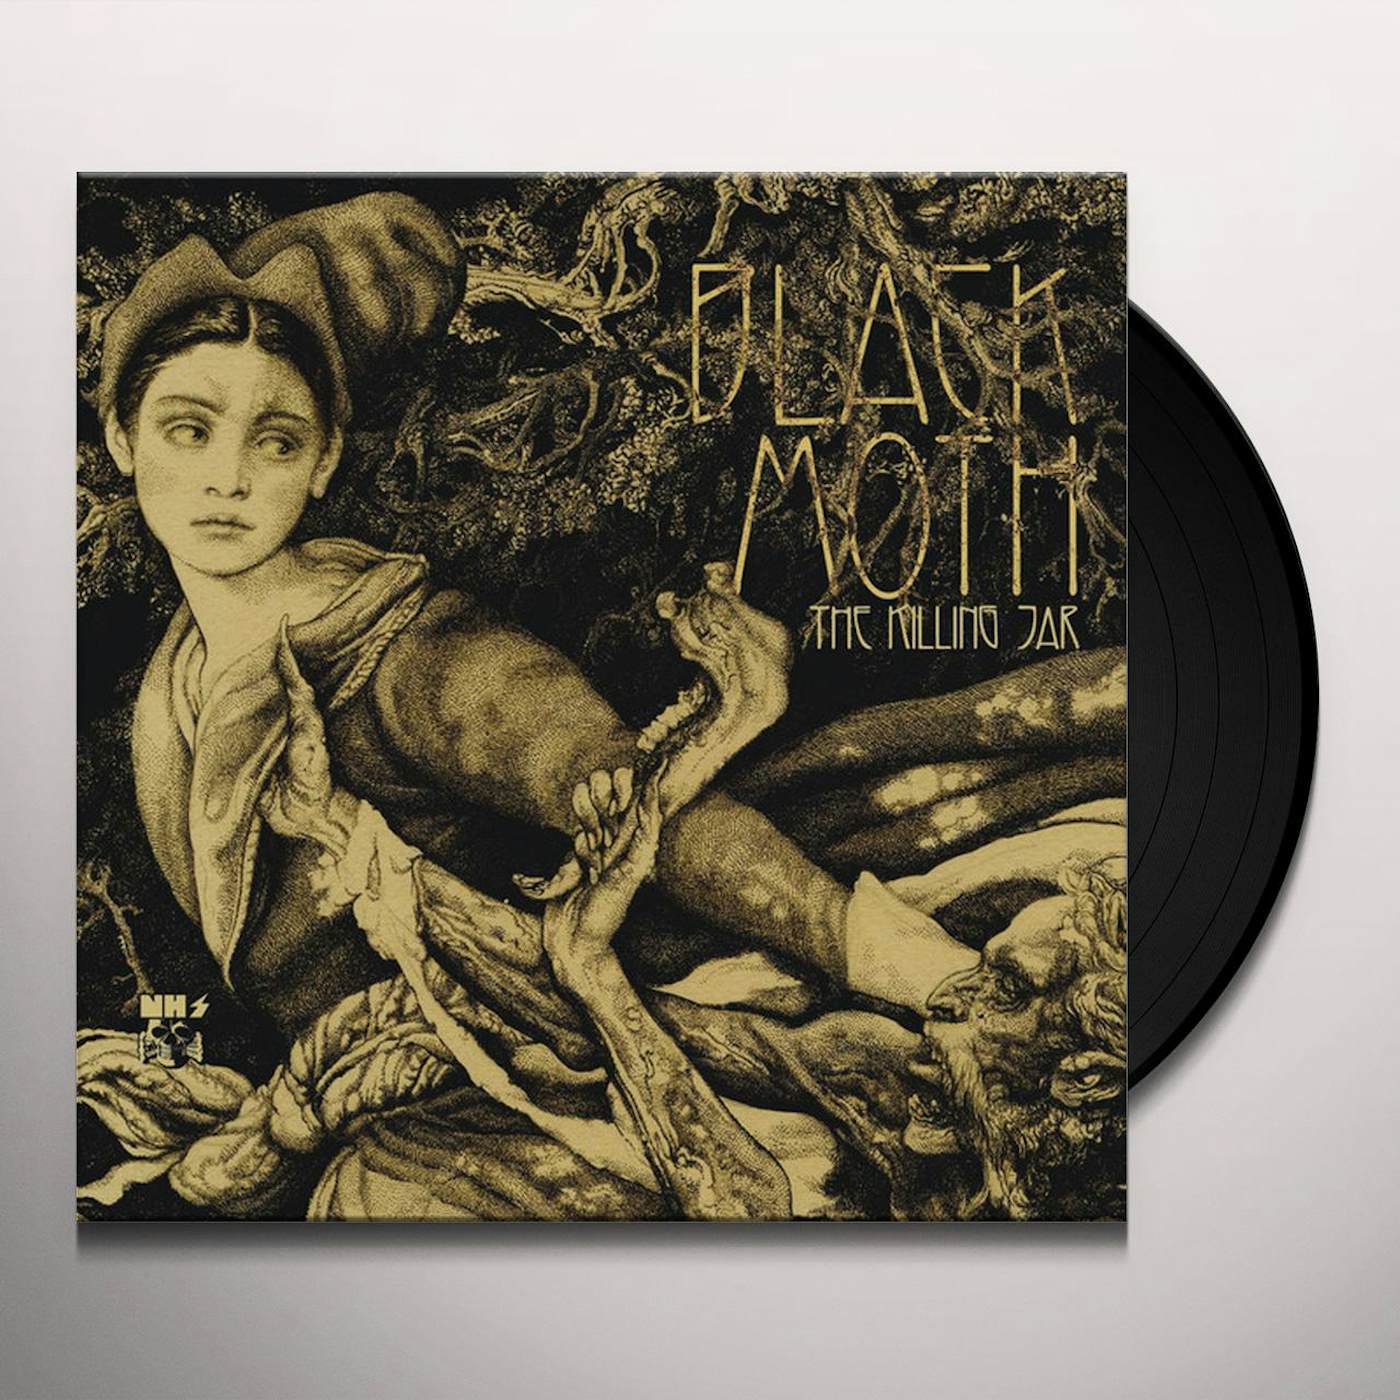 Black Moth The Killing Jar Vinyl Record